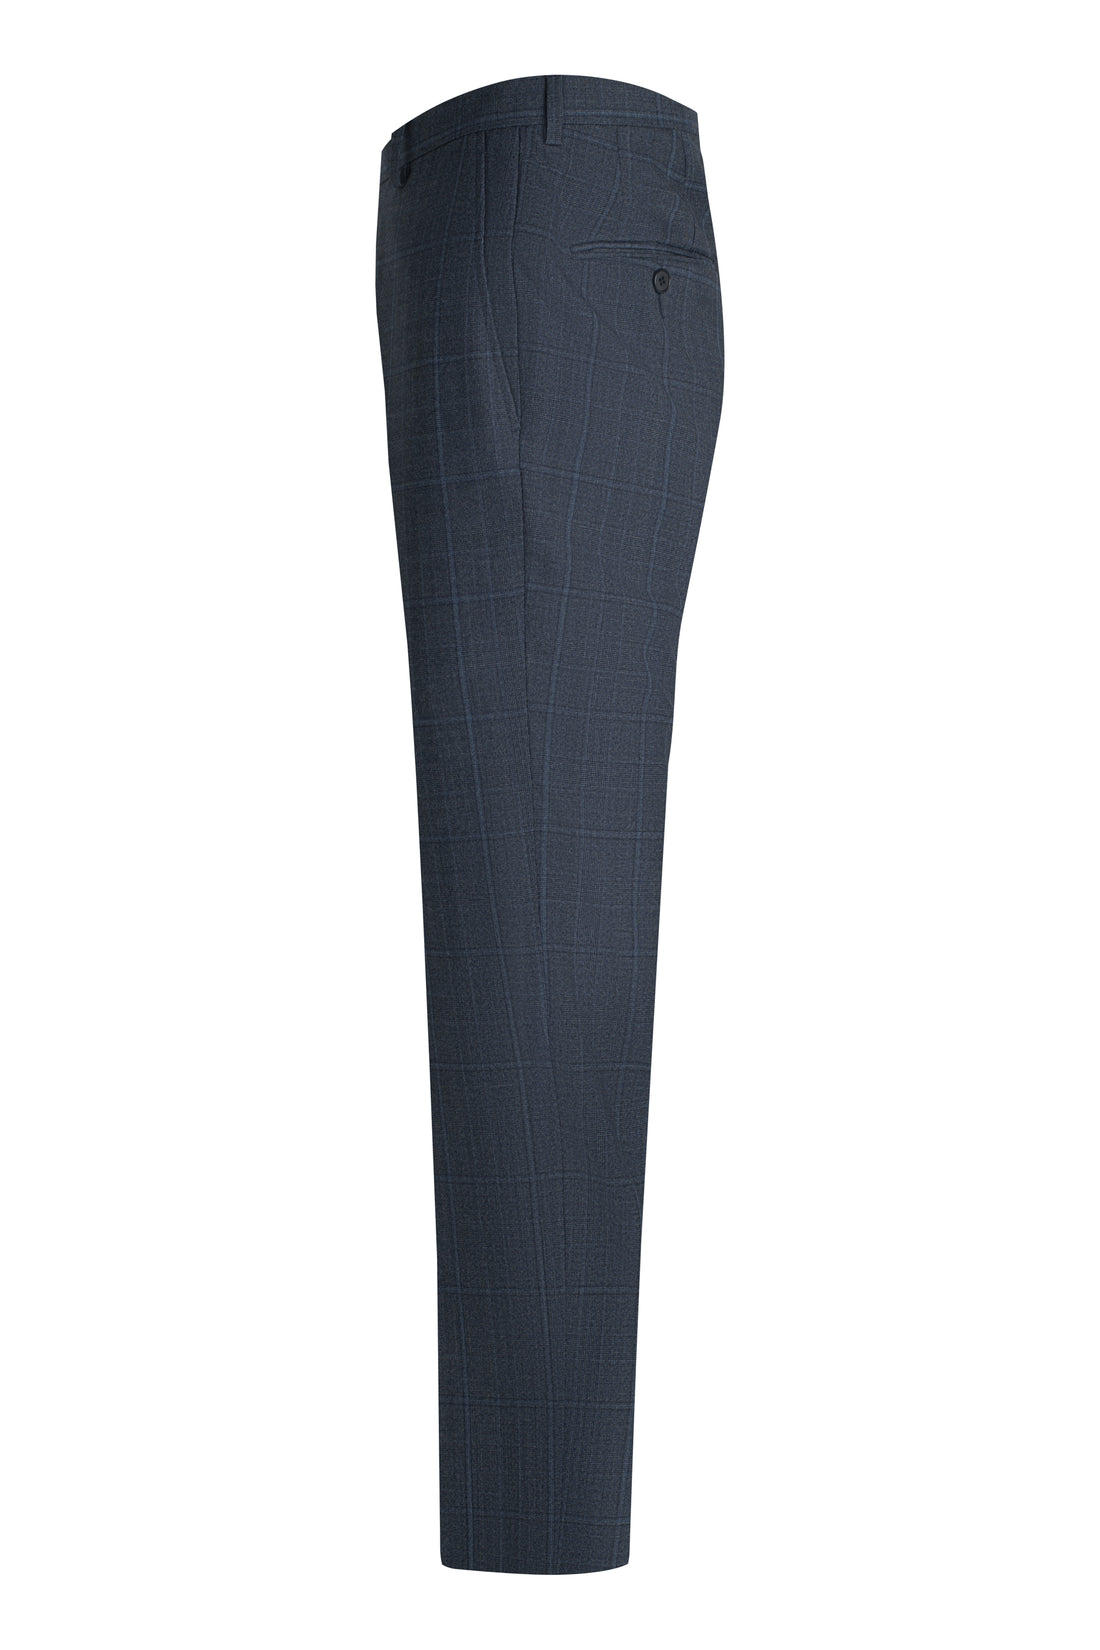 Slate Blue Tonal Plaid Suit Side Pant